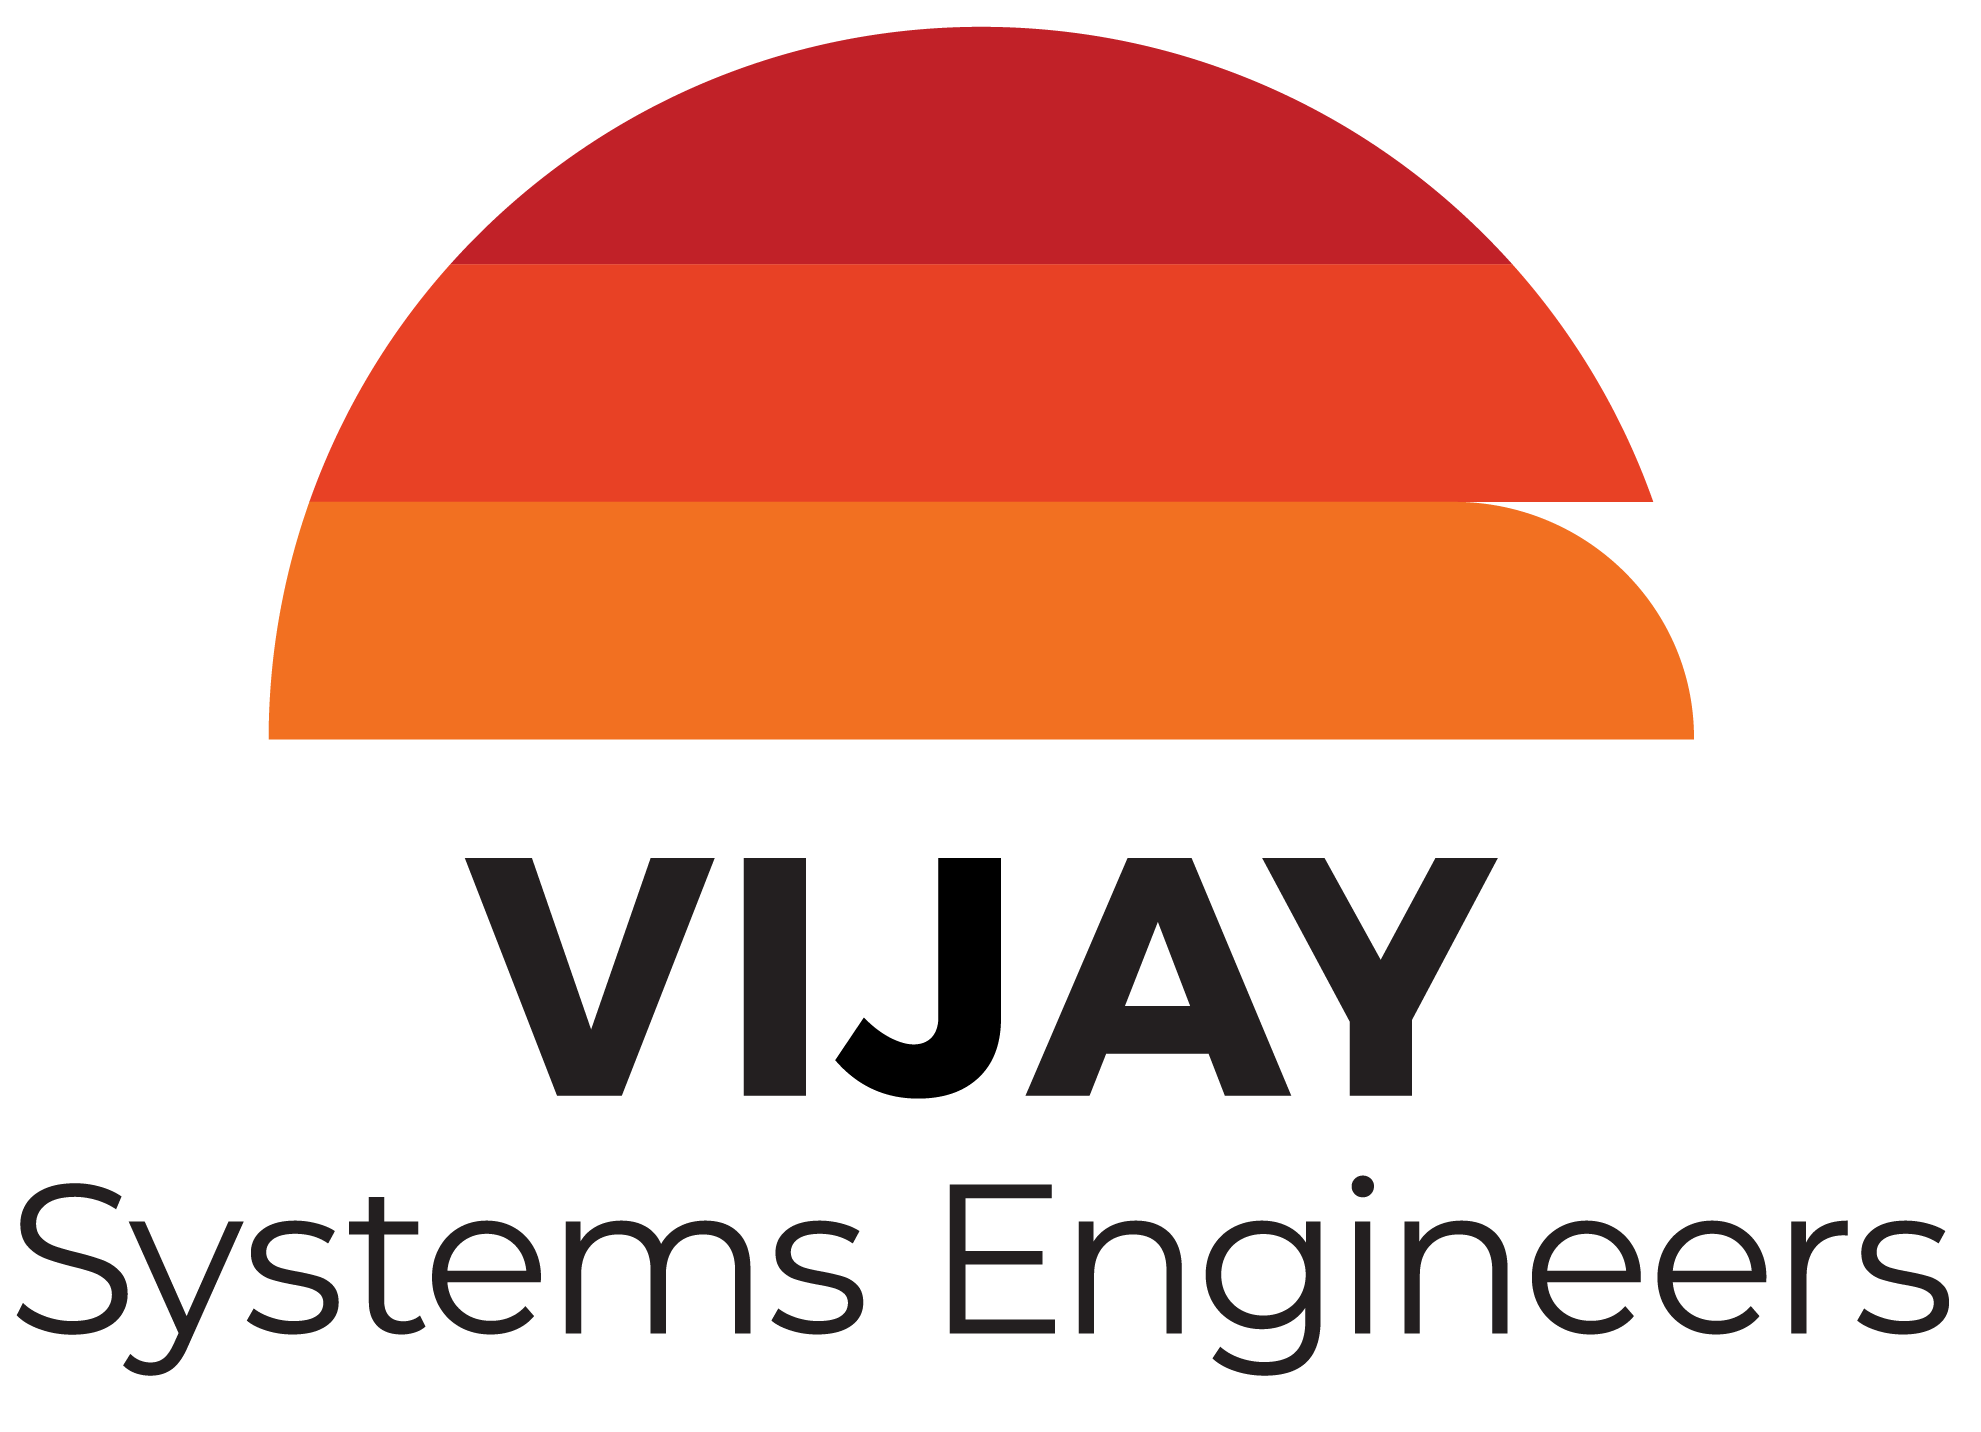 Vijay Systems Engineers Pvt. Ltd. Logo